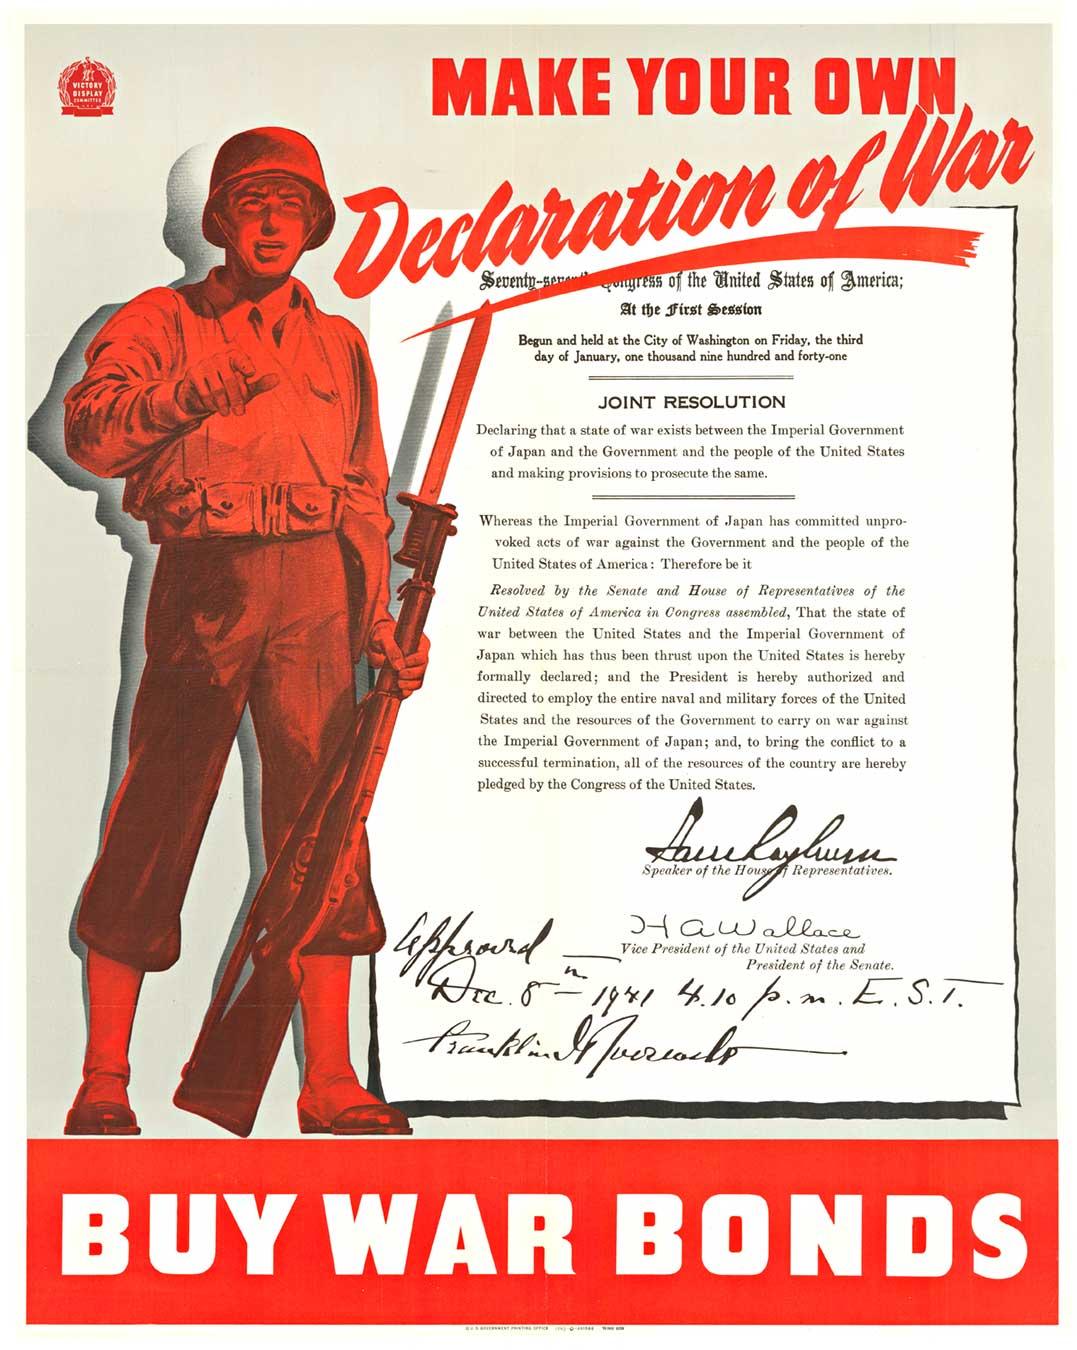 Unknown Portrait Print - Original Make Your Own Declaration of War vintage World Ware Two poster